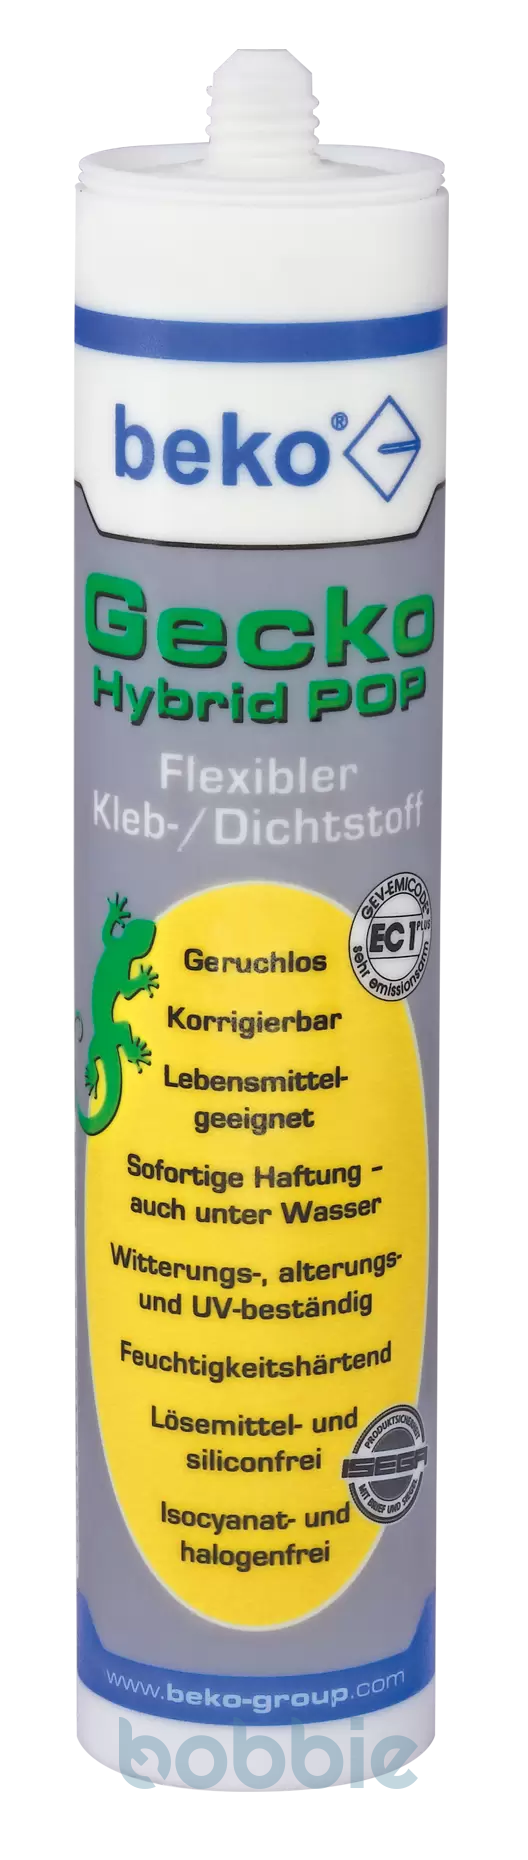 Gecko Hybrid POP 310 ml WEISS Kleb-/Dichtstoff